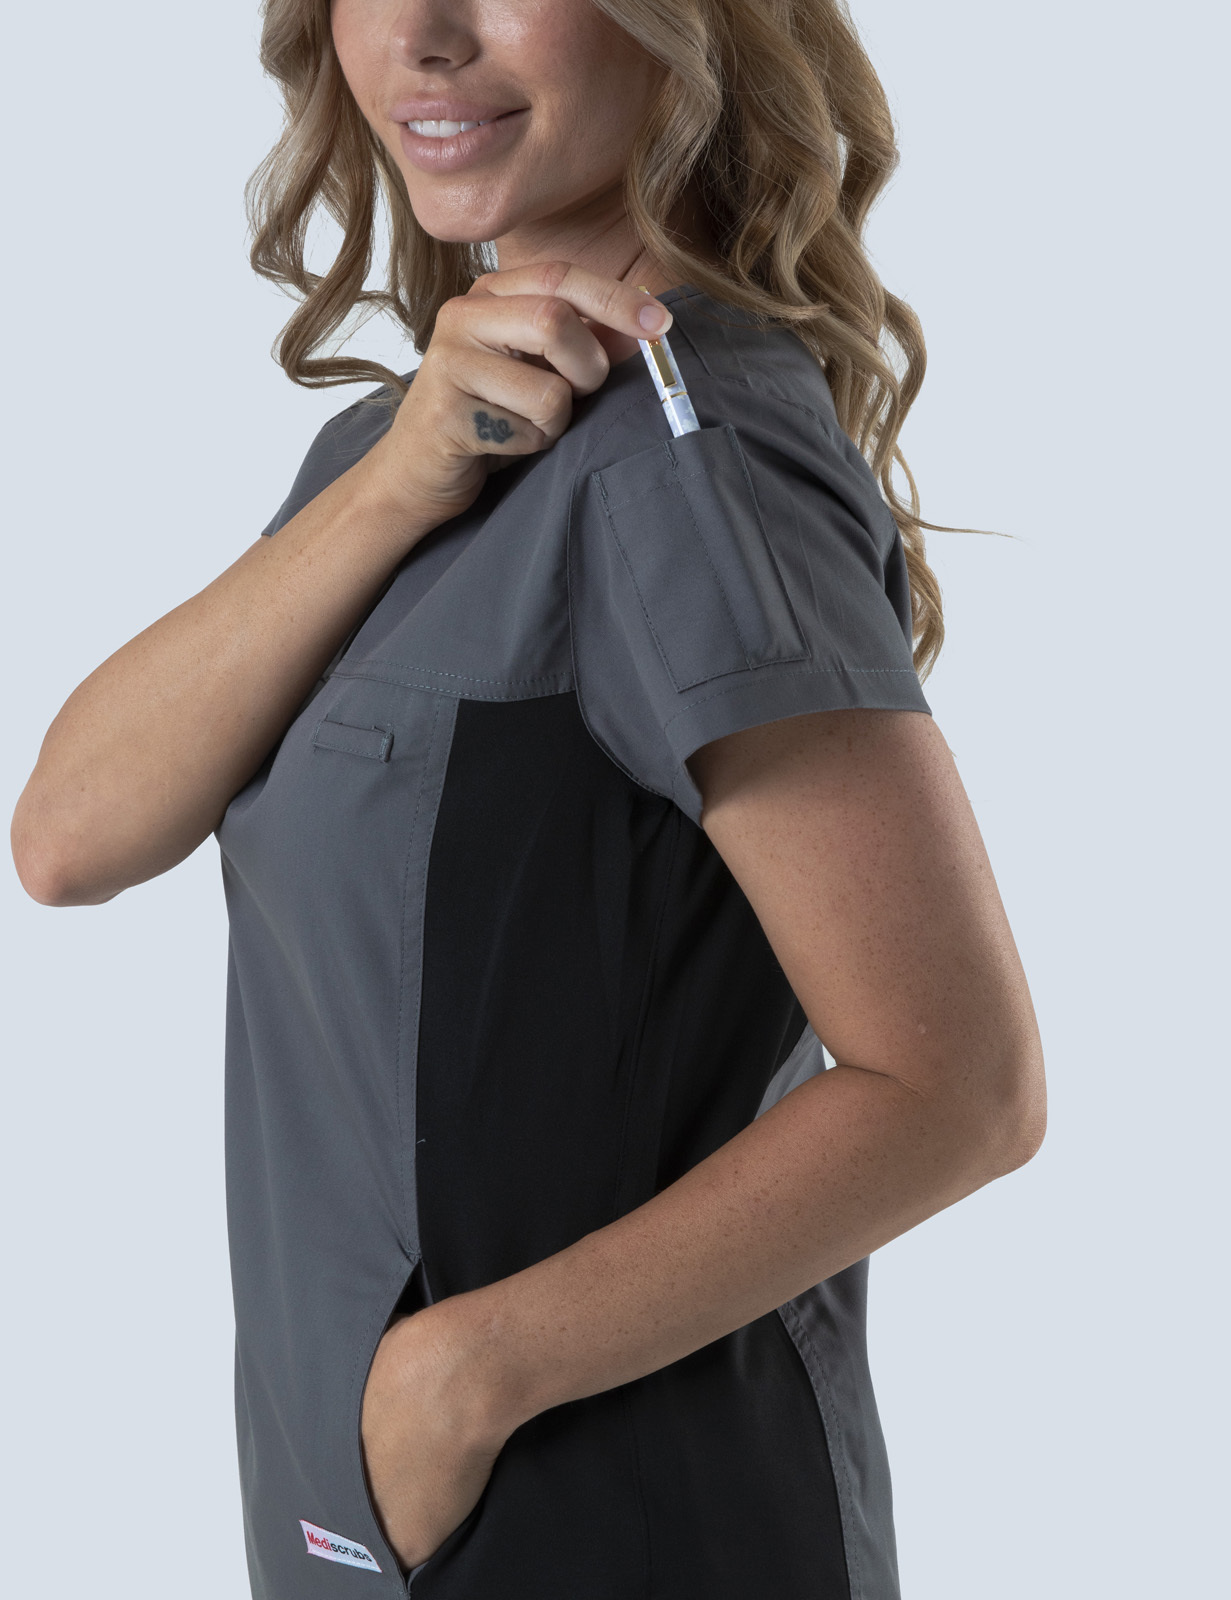 UQ Vets Gatton General Practitioner Uniform Top Only Bundle (Women's Fit Spandex Top in Steel Grey incl Logos)